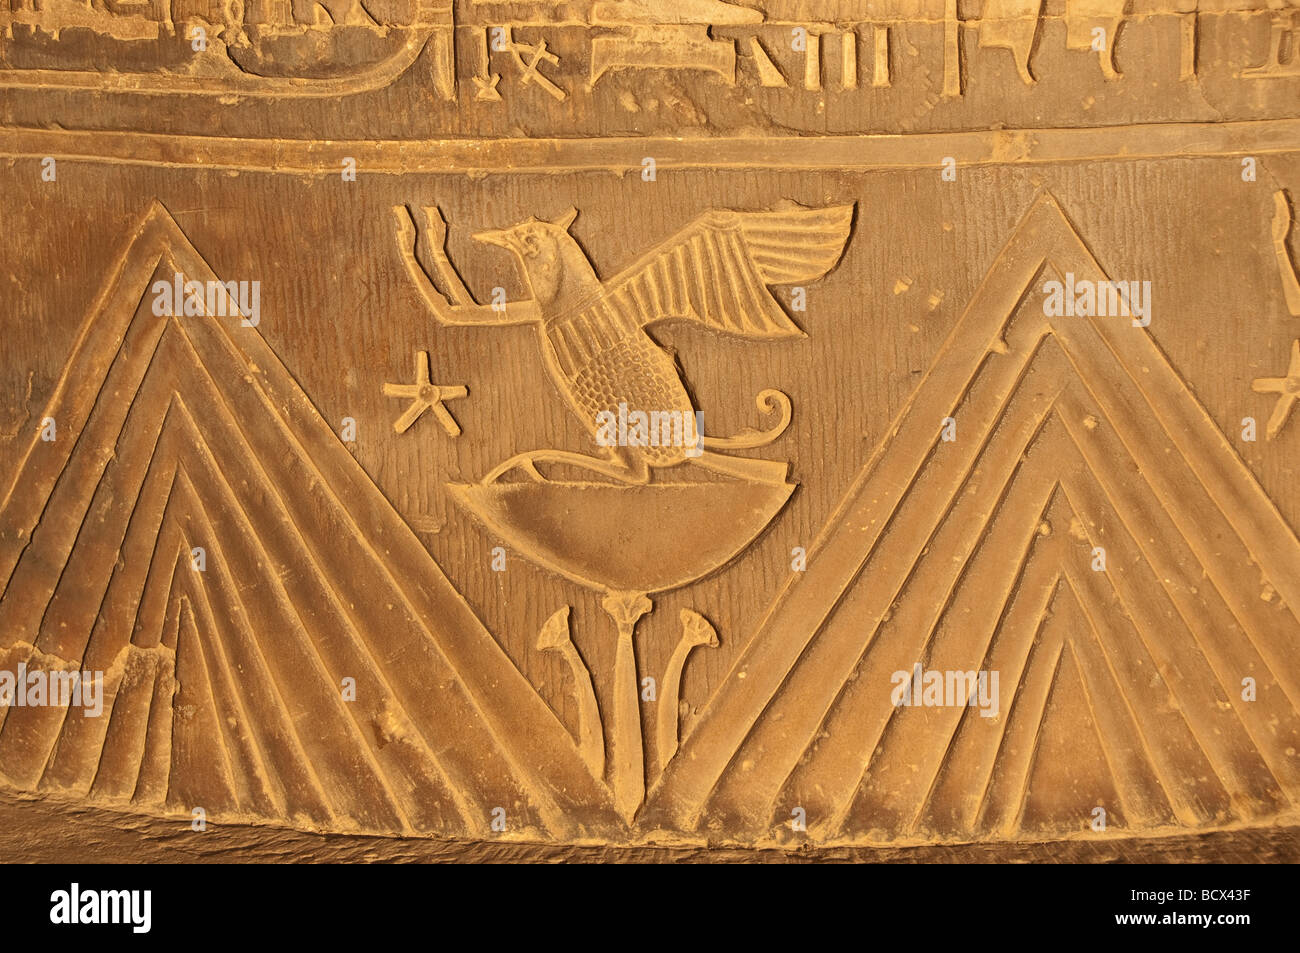 Egitto Kom Ombo parete del tempio carving rilievi lotus stelle animale geroglifici hieroglphs Foto Stock